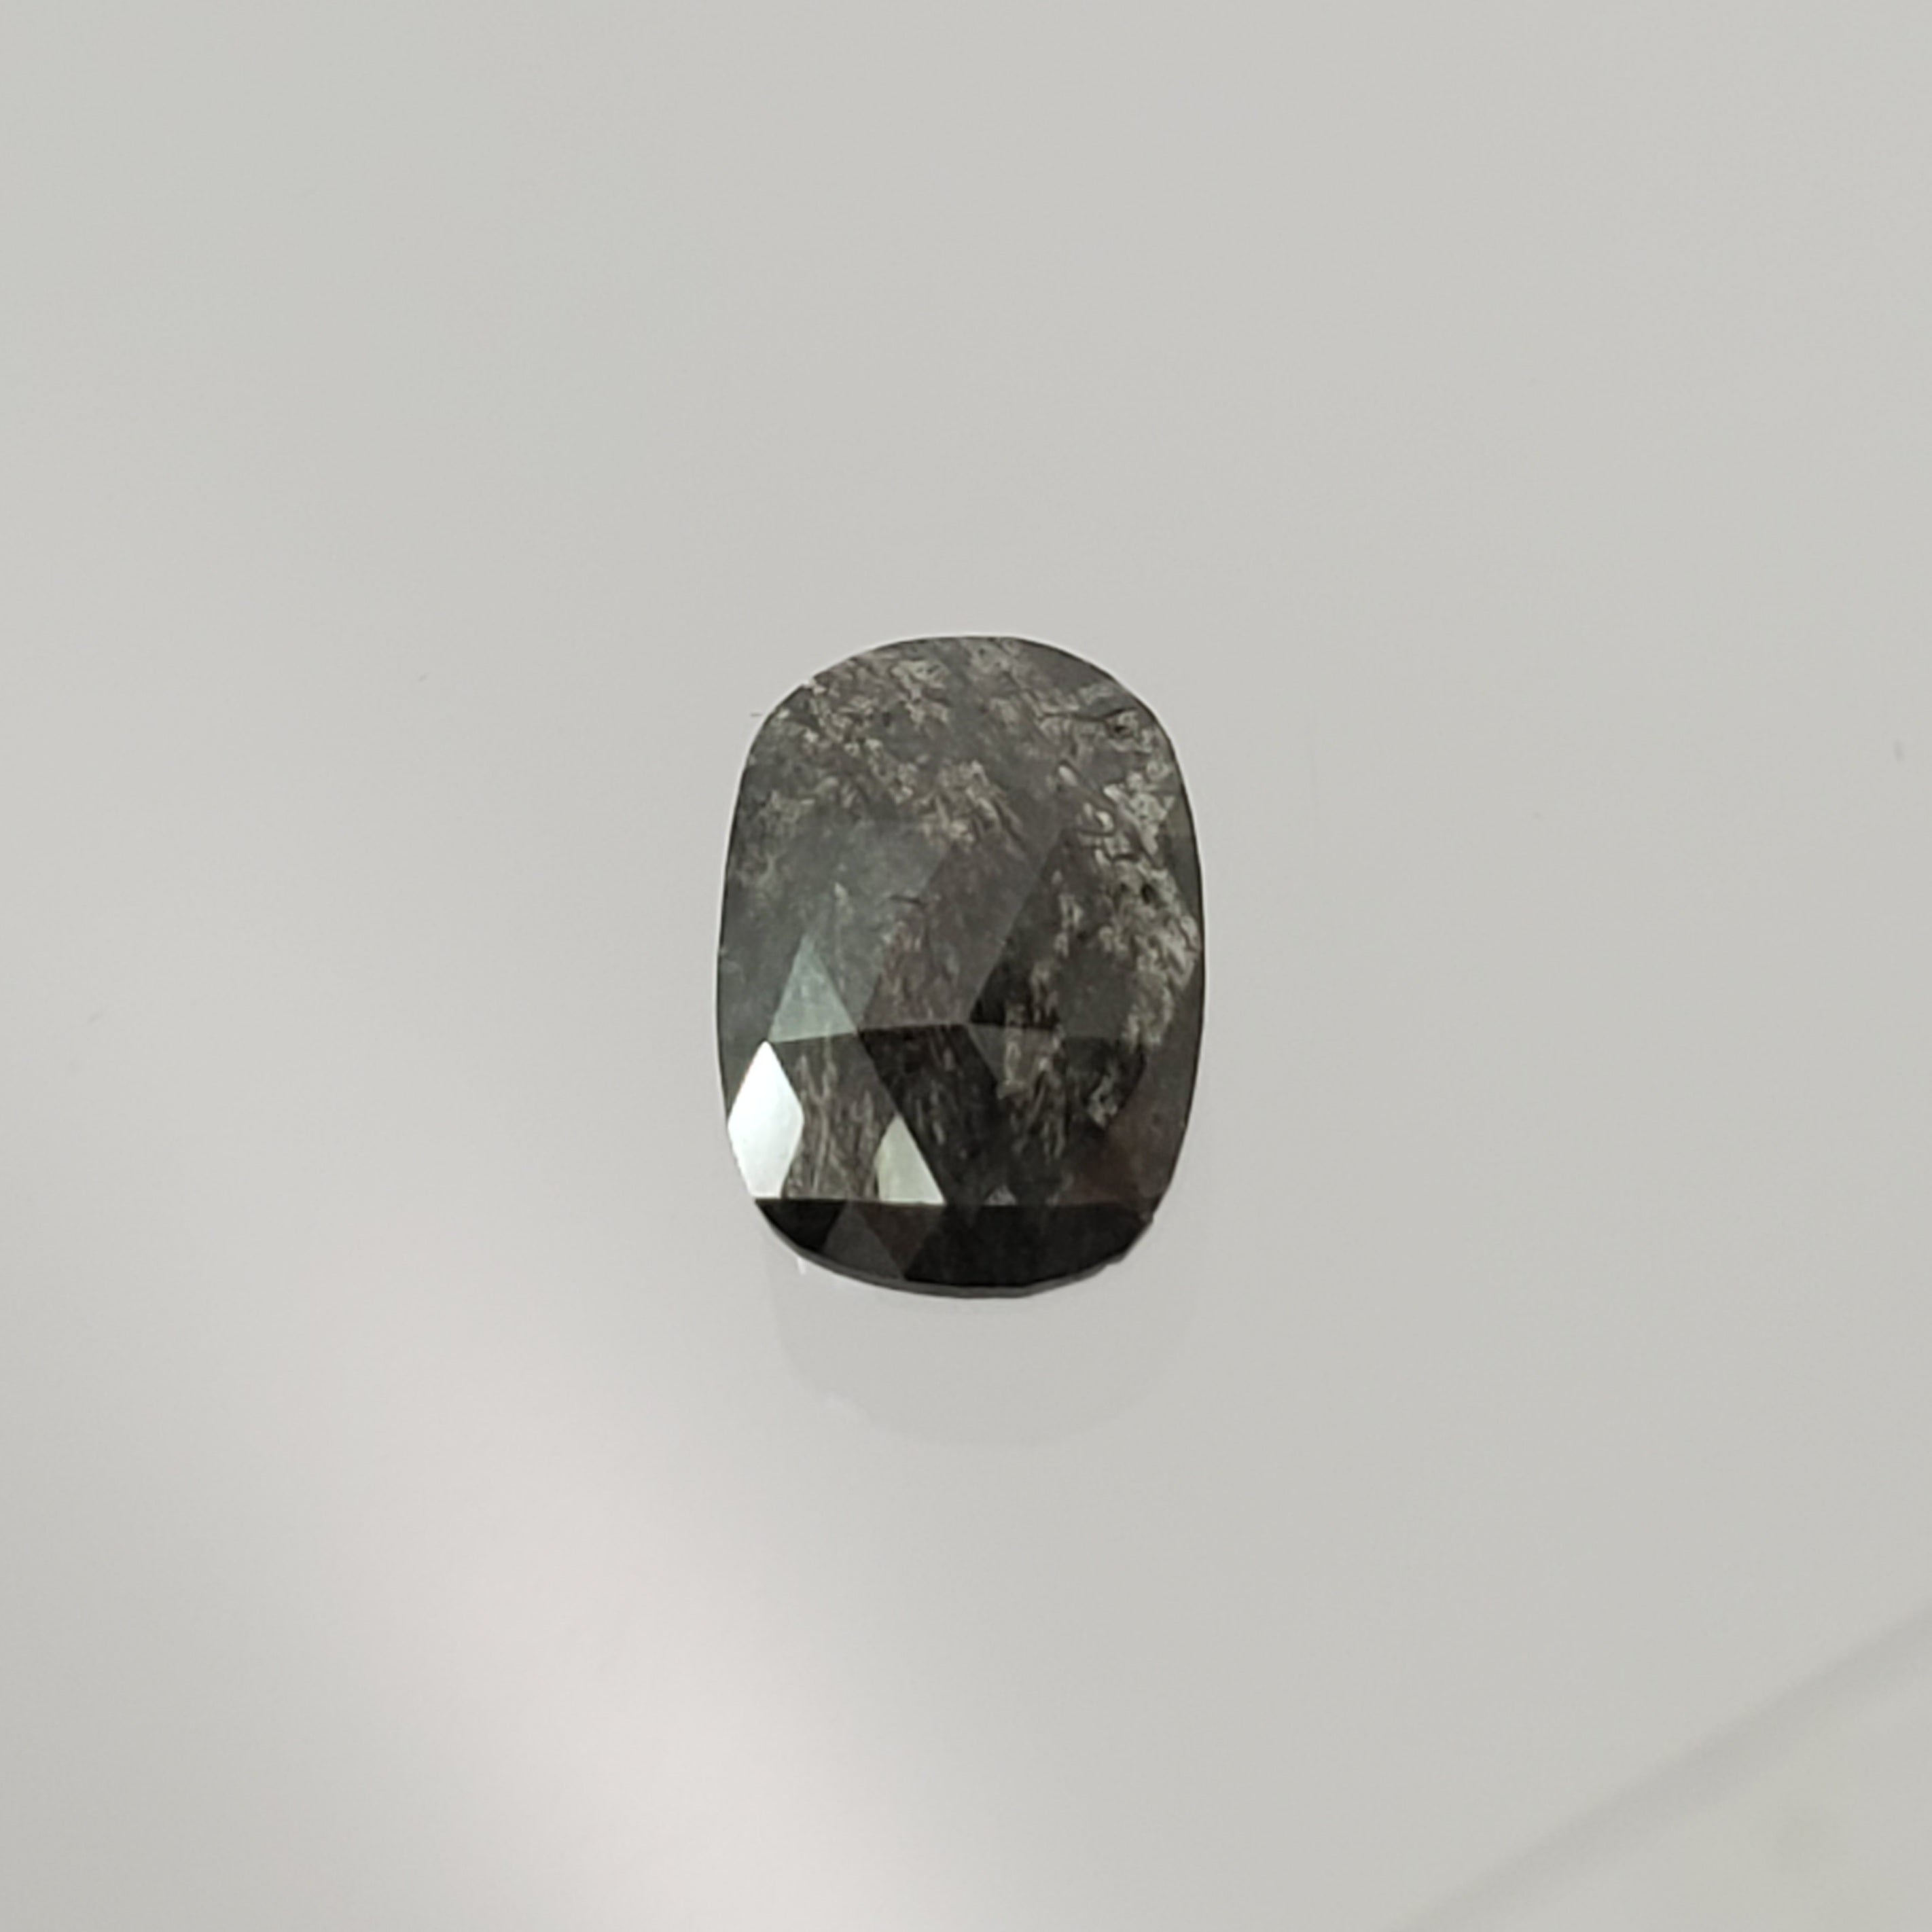 2.41 carat oval-rectangle artisanal cut loose diamond